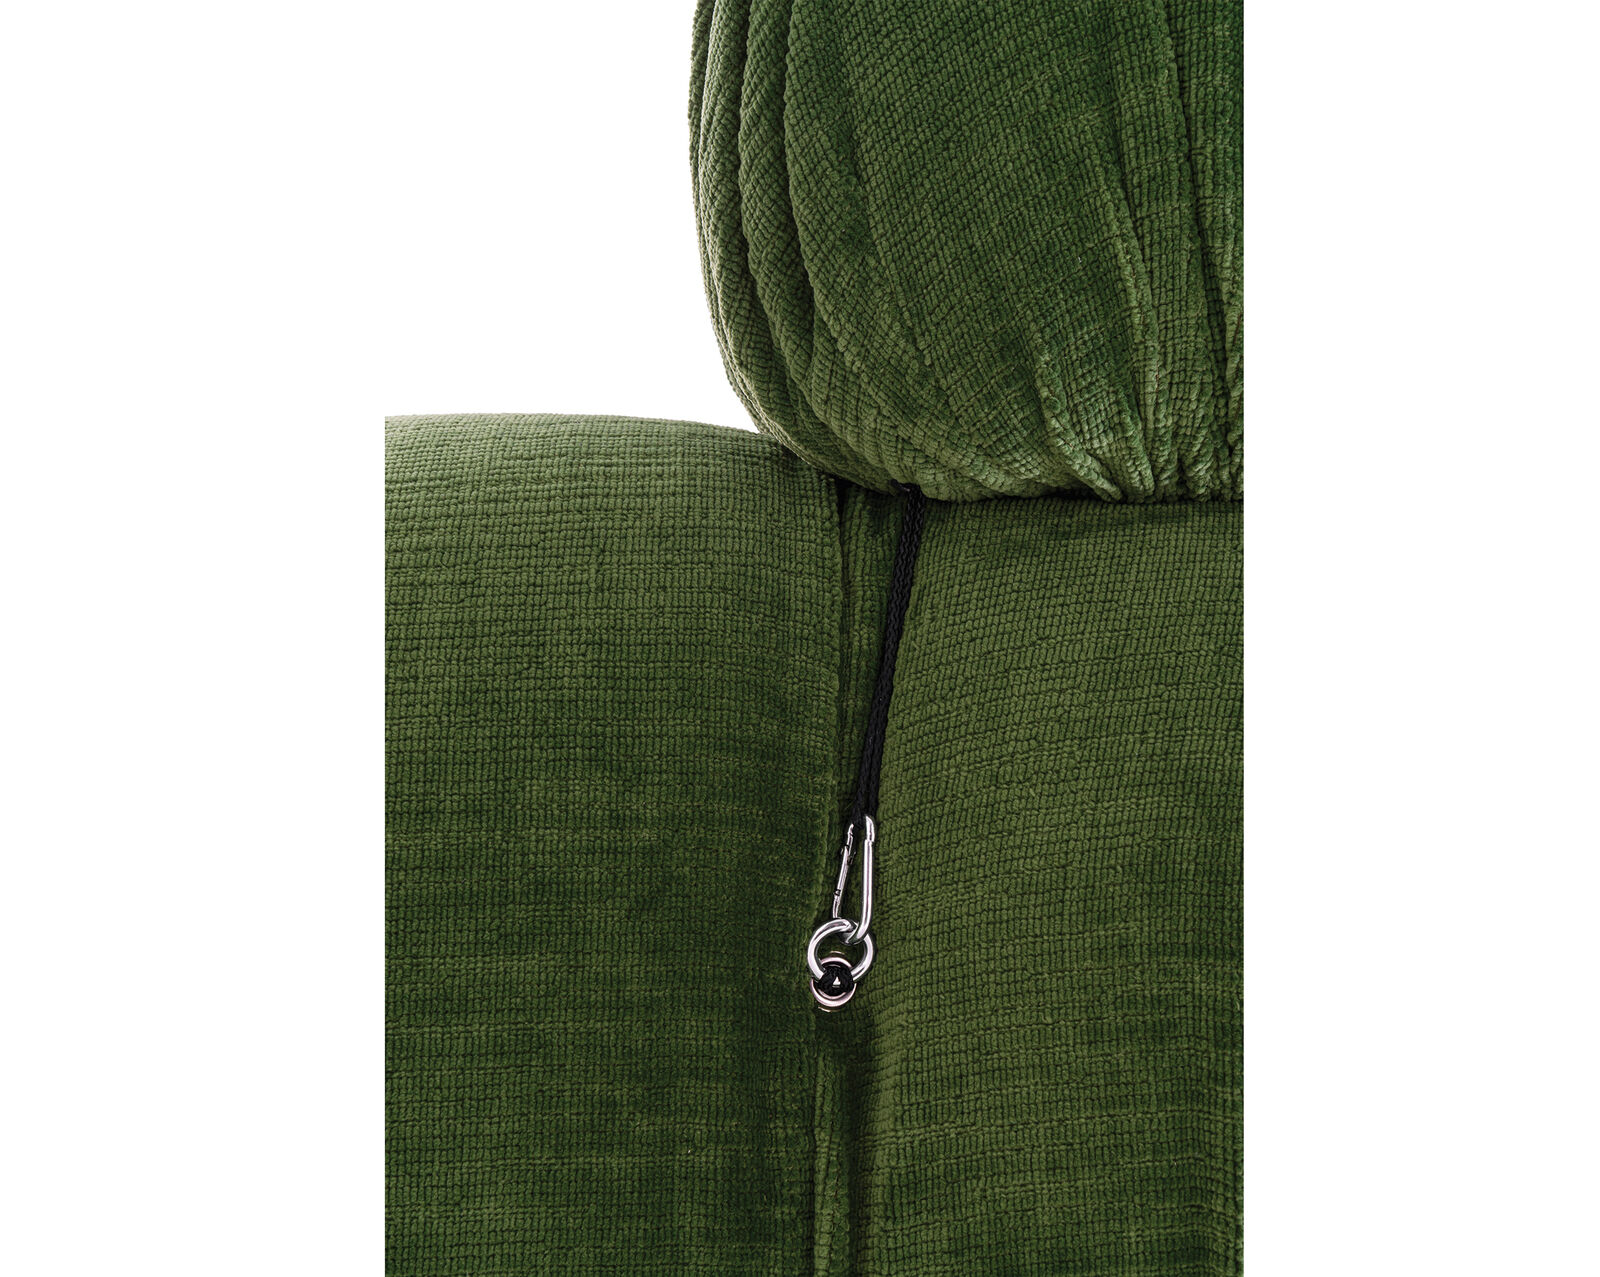 Camaleonda in green details